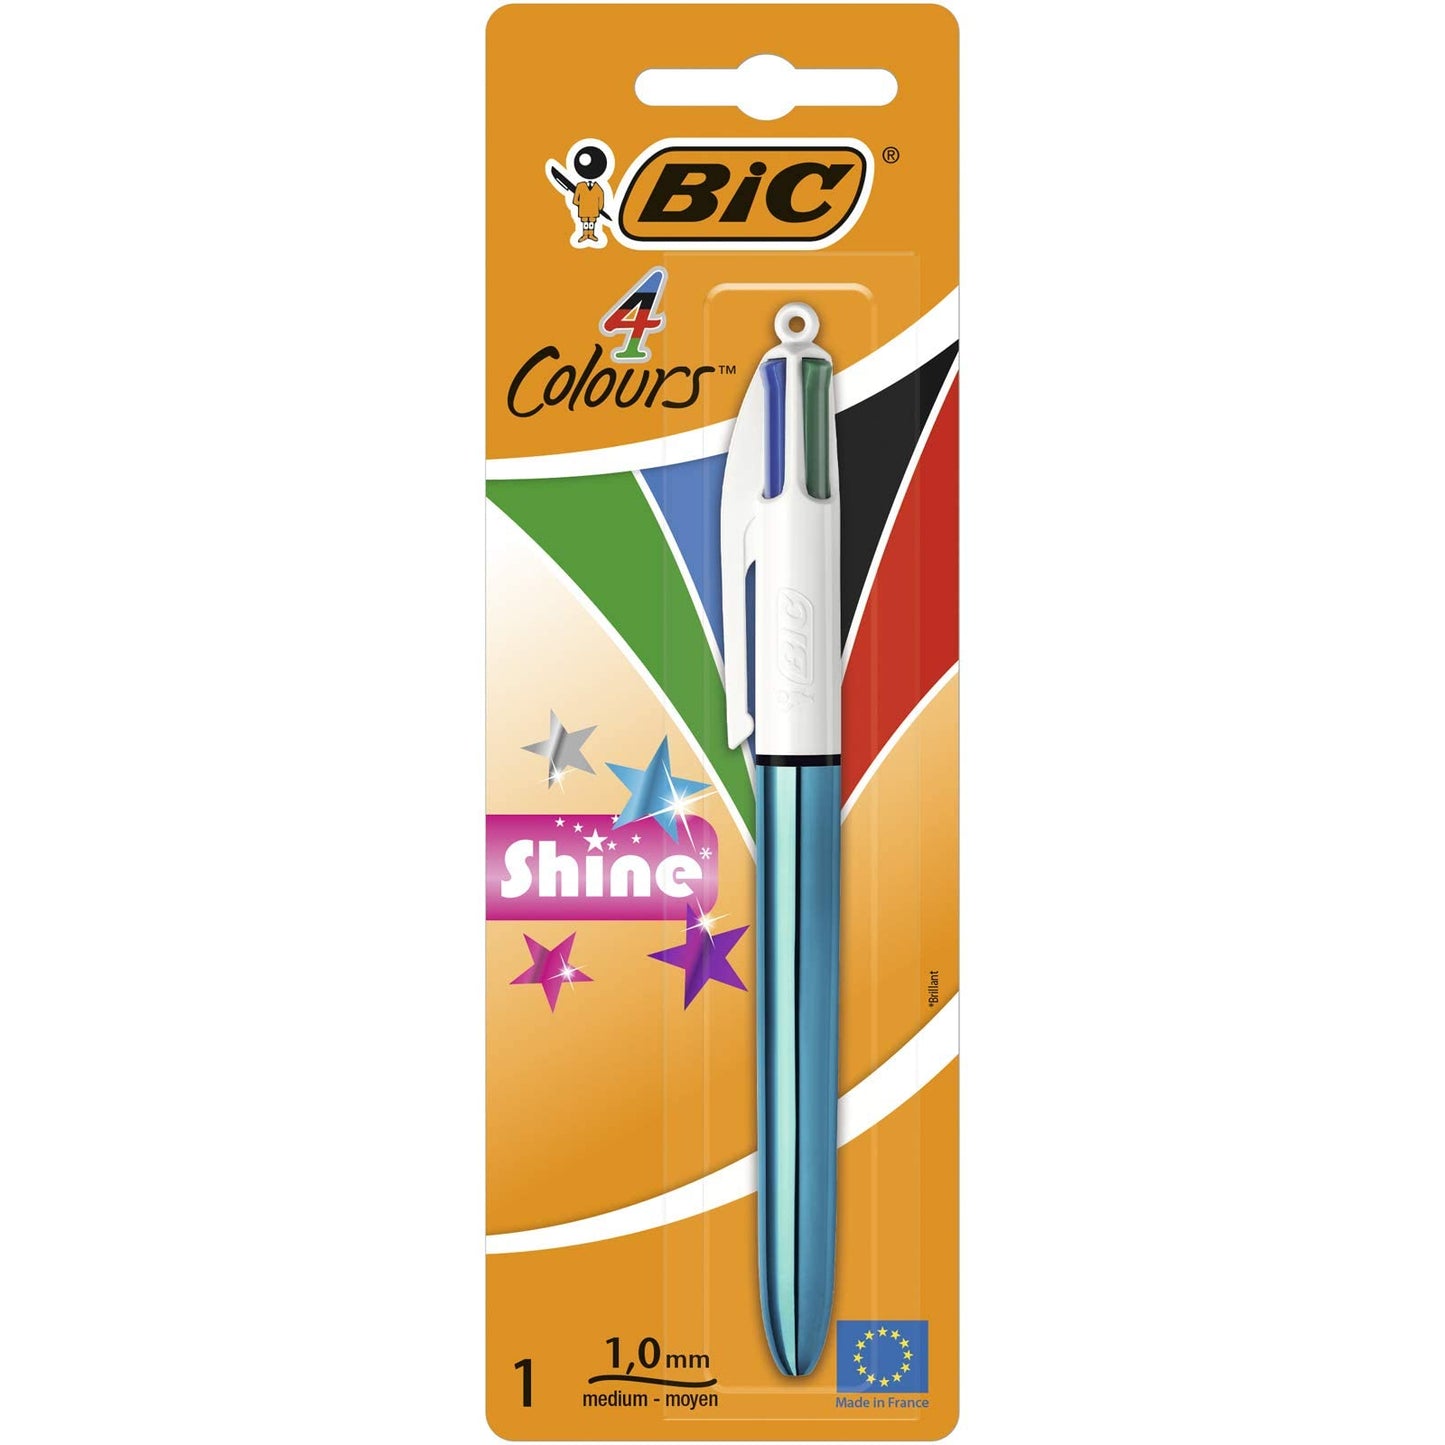 BIC 4 Colours Shine Ballpoint Pen (Pack of 1)